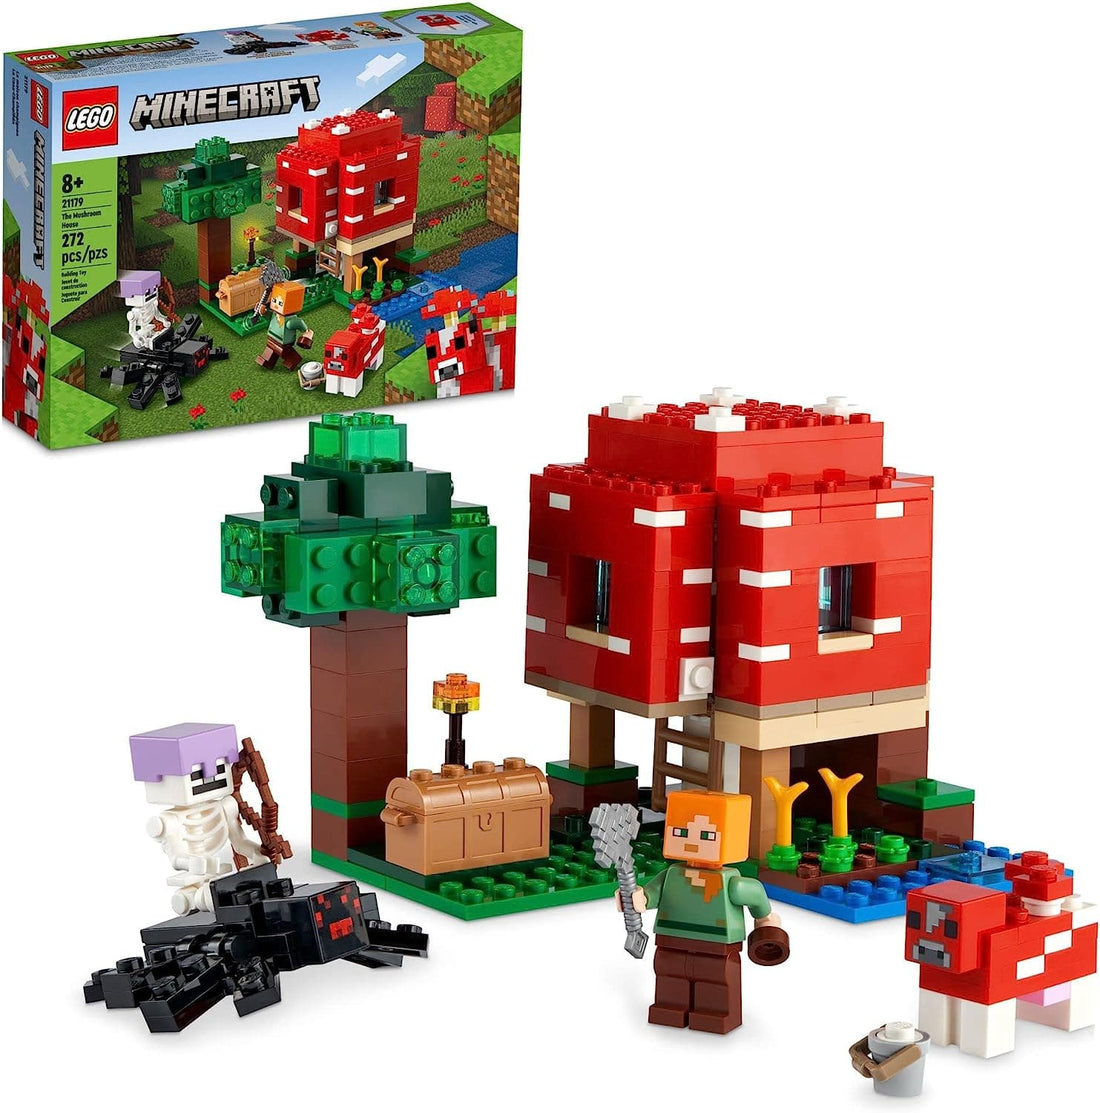 LEGO Minecraft The Mushroom House Set with Alex, Mooshroom & Spider Jockey Figures - best price from Maltashopper.com 21179